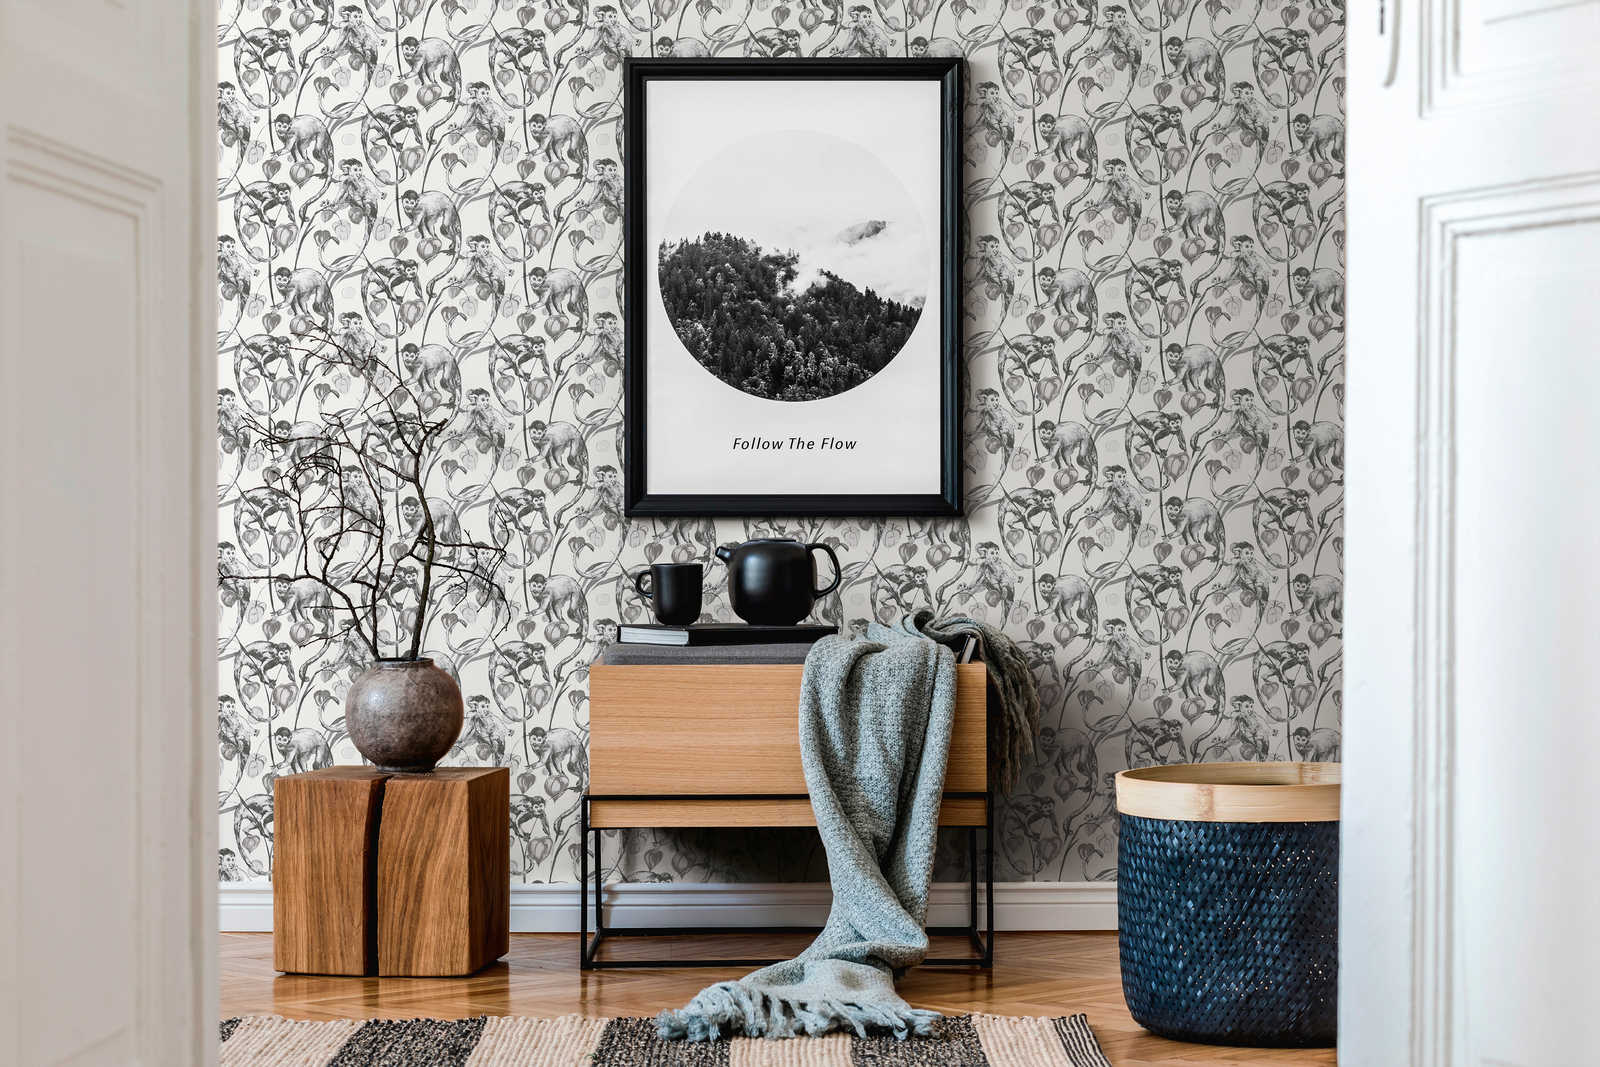             MICHALSKY non-woven wallpaper black and white monkey pattern
        